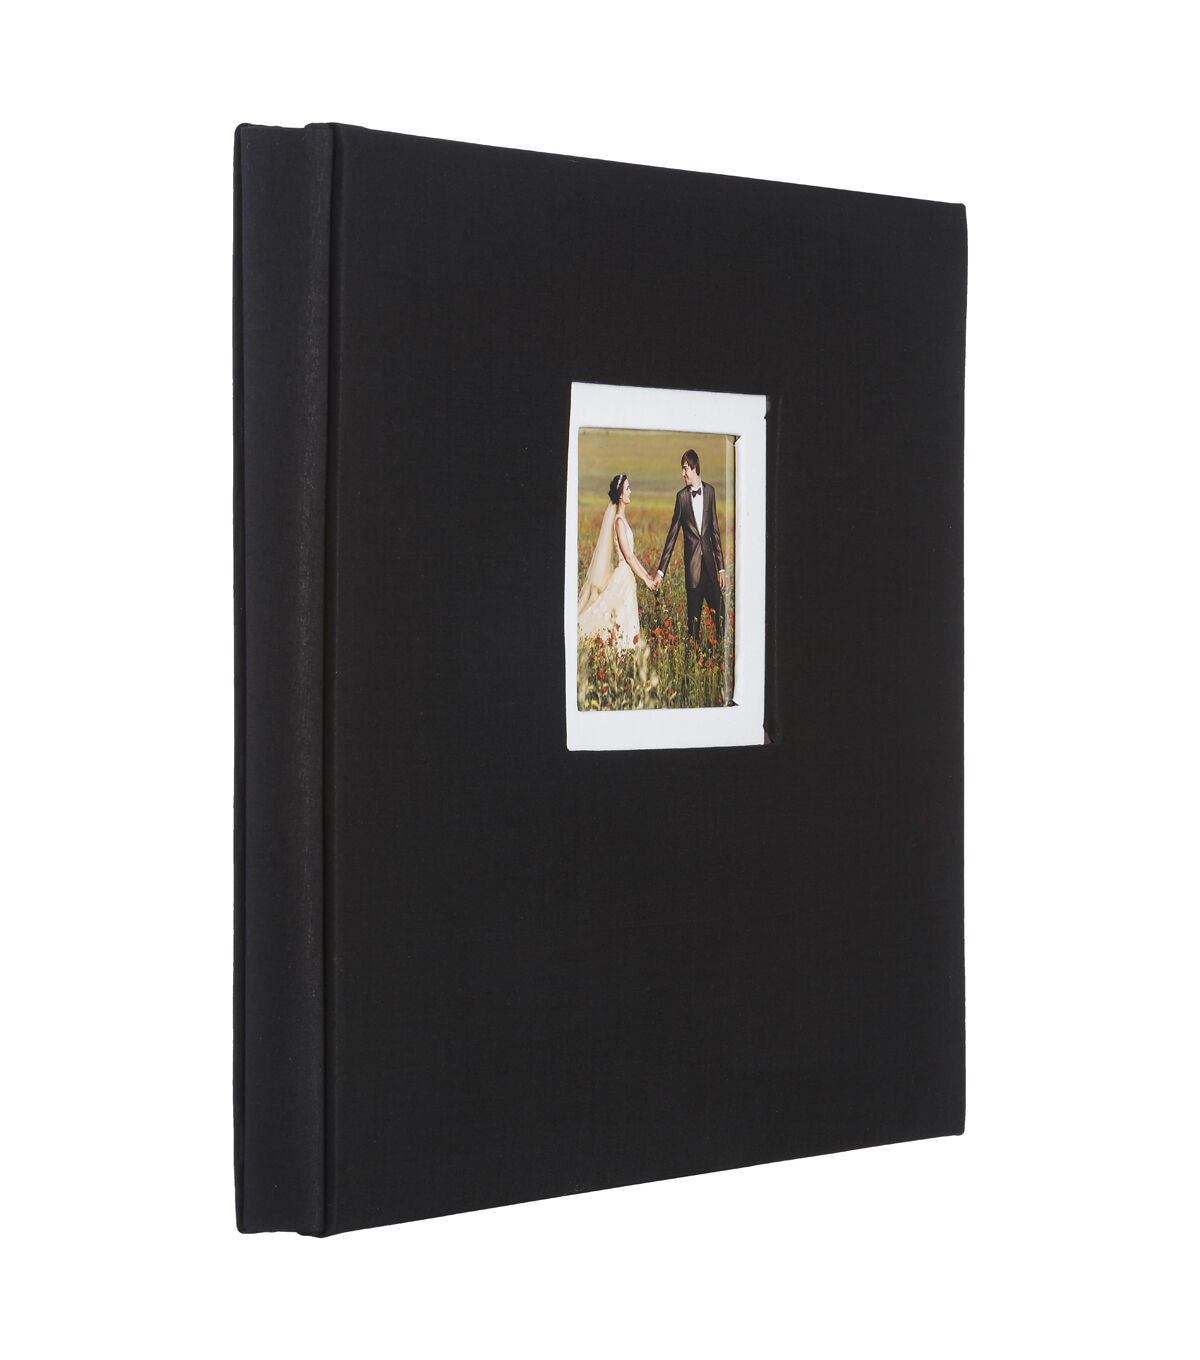 12 x 12 Black Scrapbook Album by Park Lane